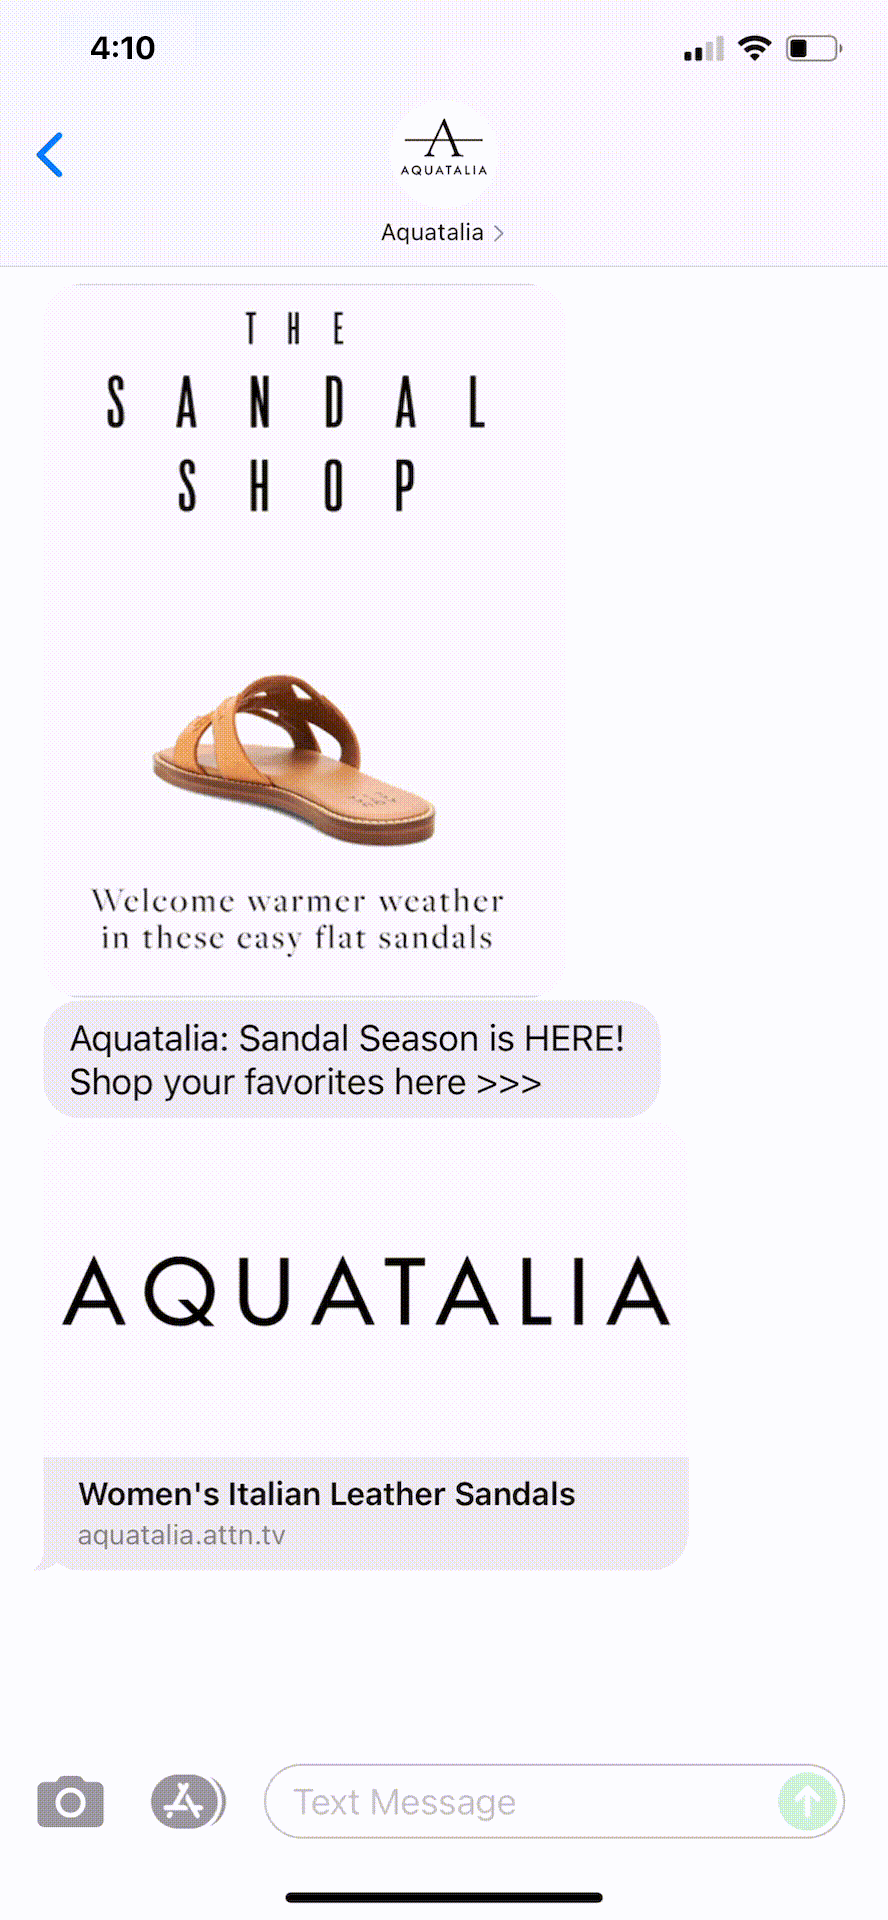 Aquatalia-Text-Message-Marketing-Example-04.30.2021